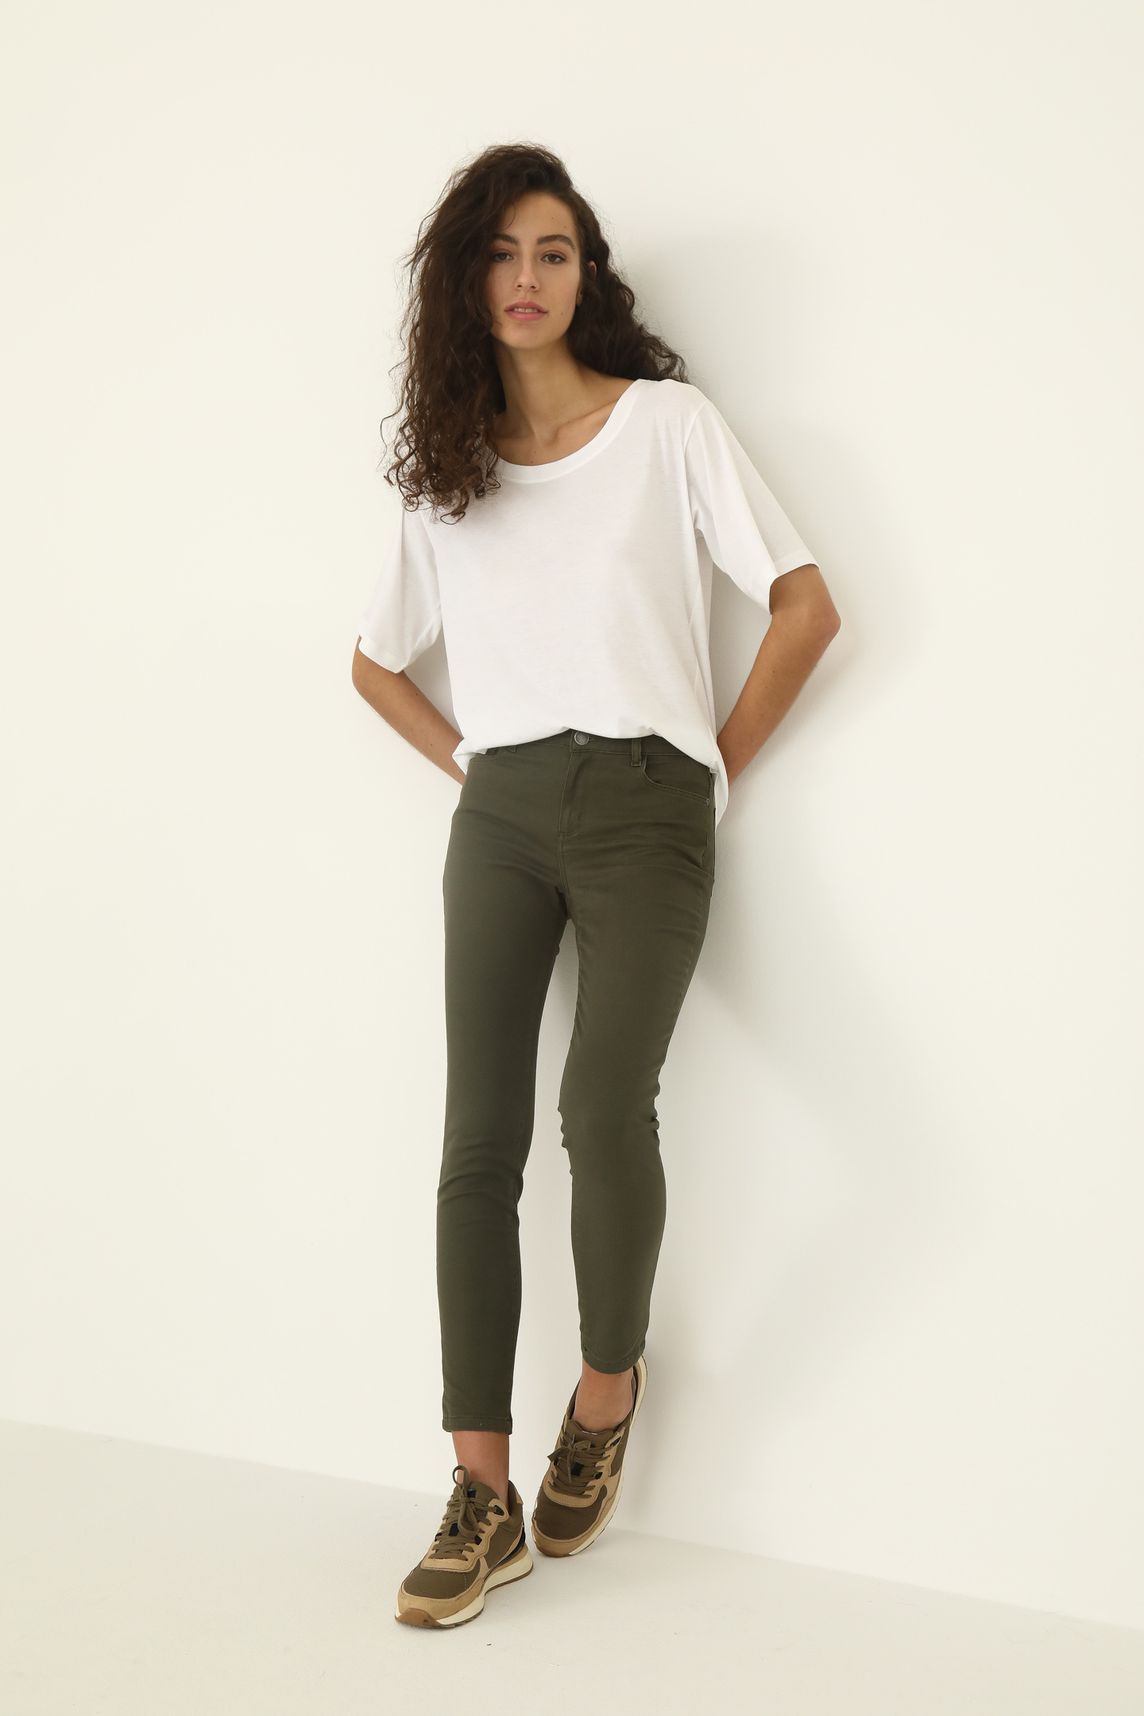 Macy's Pantalones De Mujer De Vestir Online Shop, Save 57% 